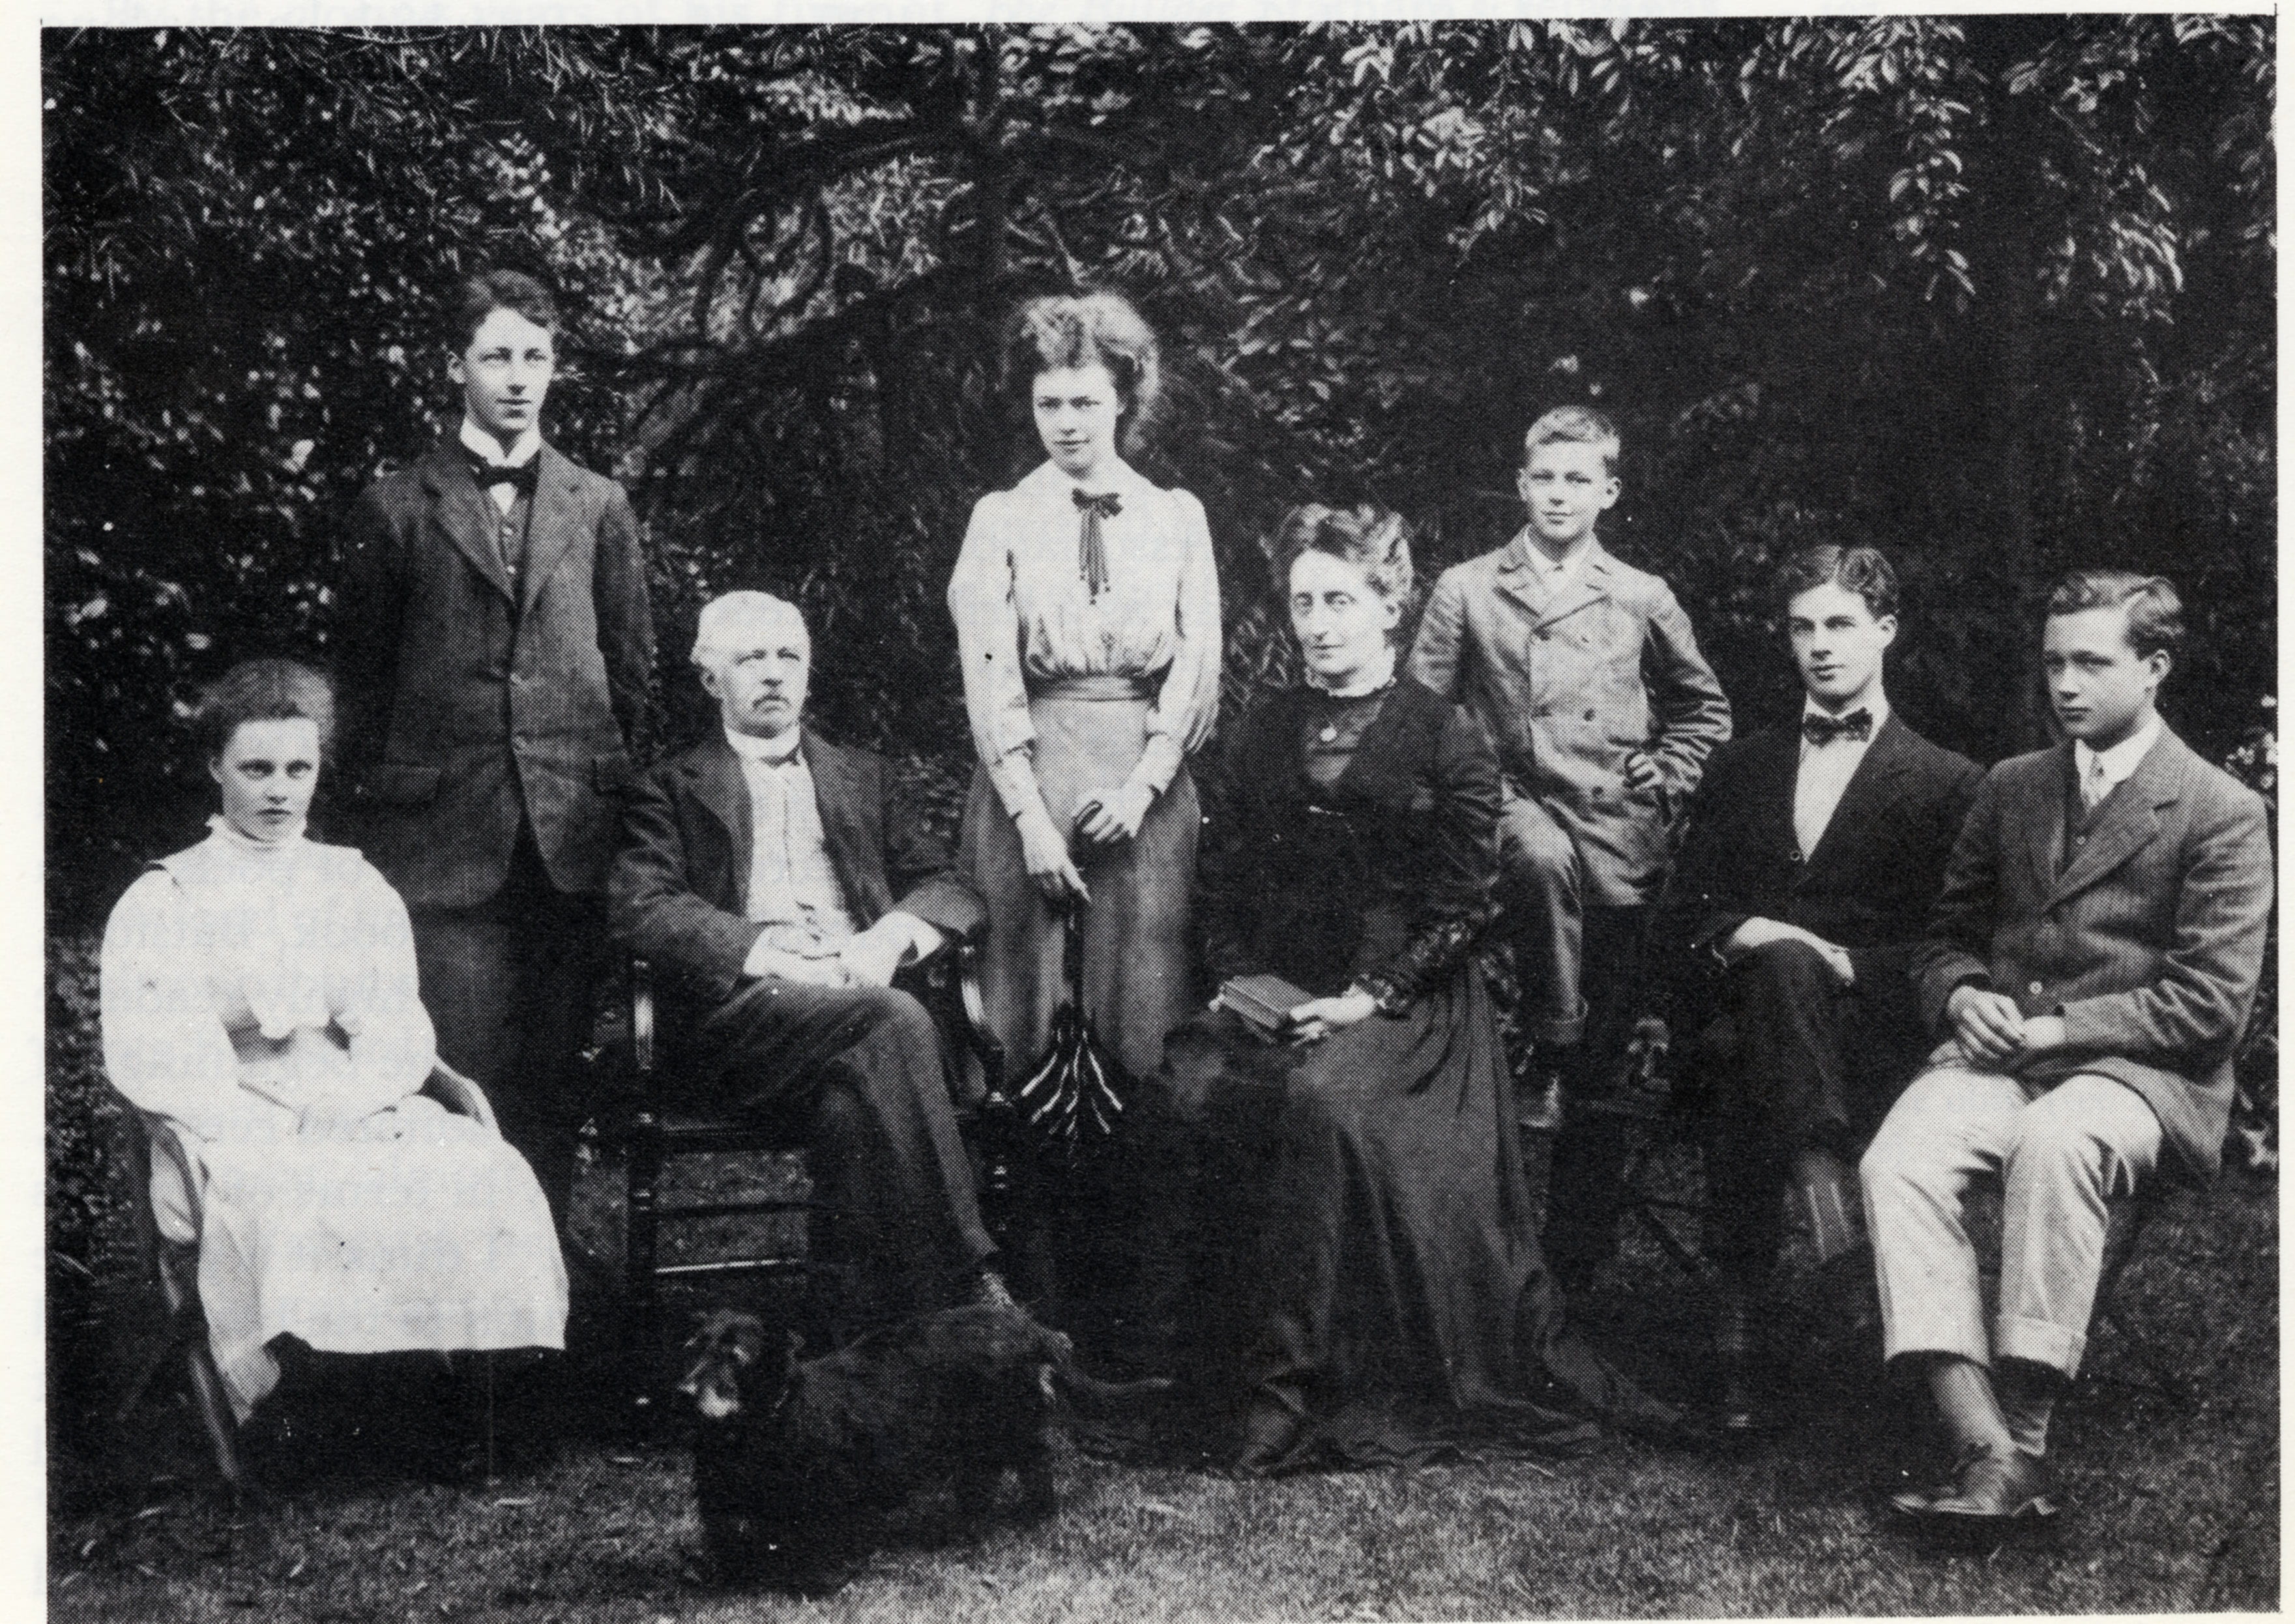 Statham family, c. 1910